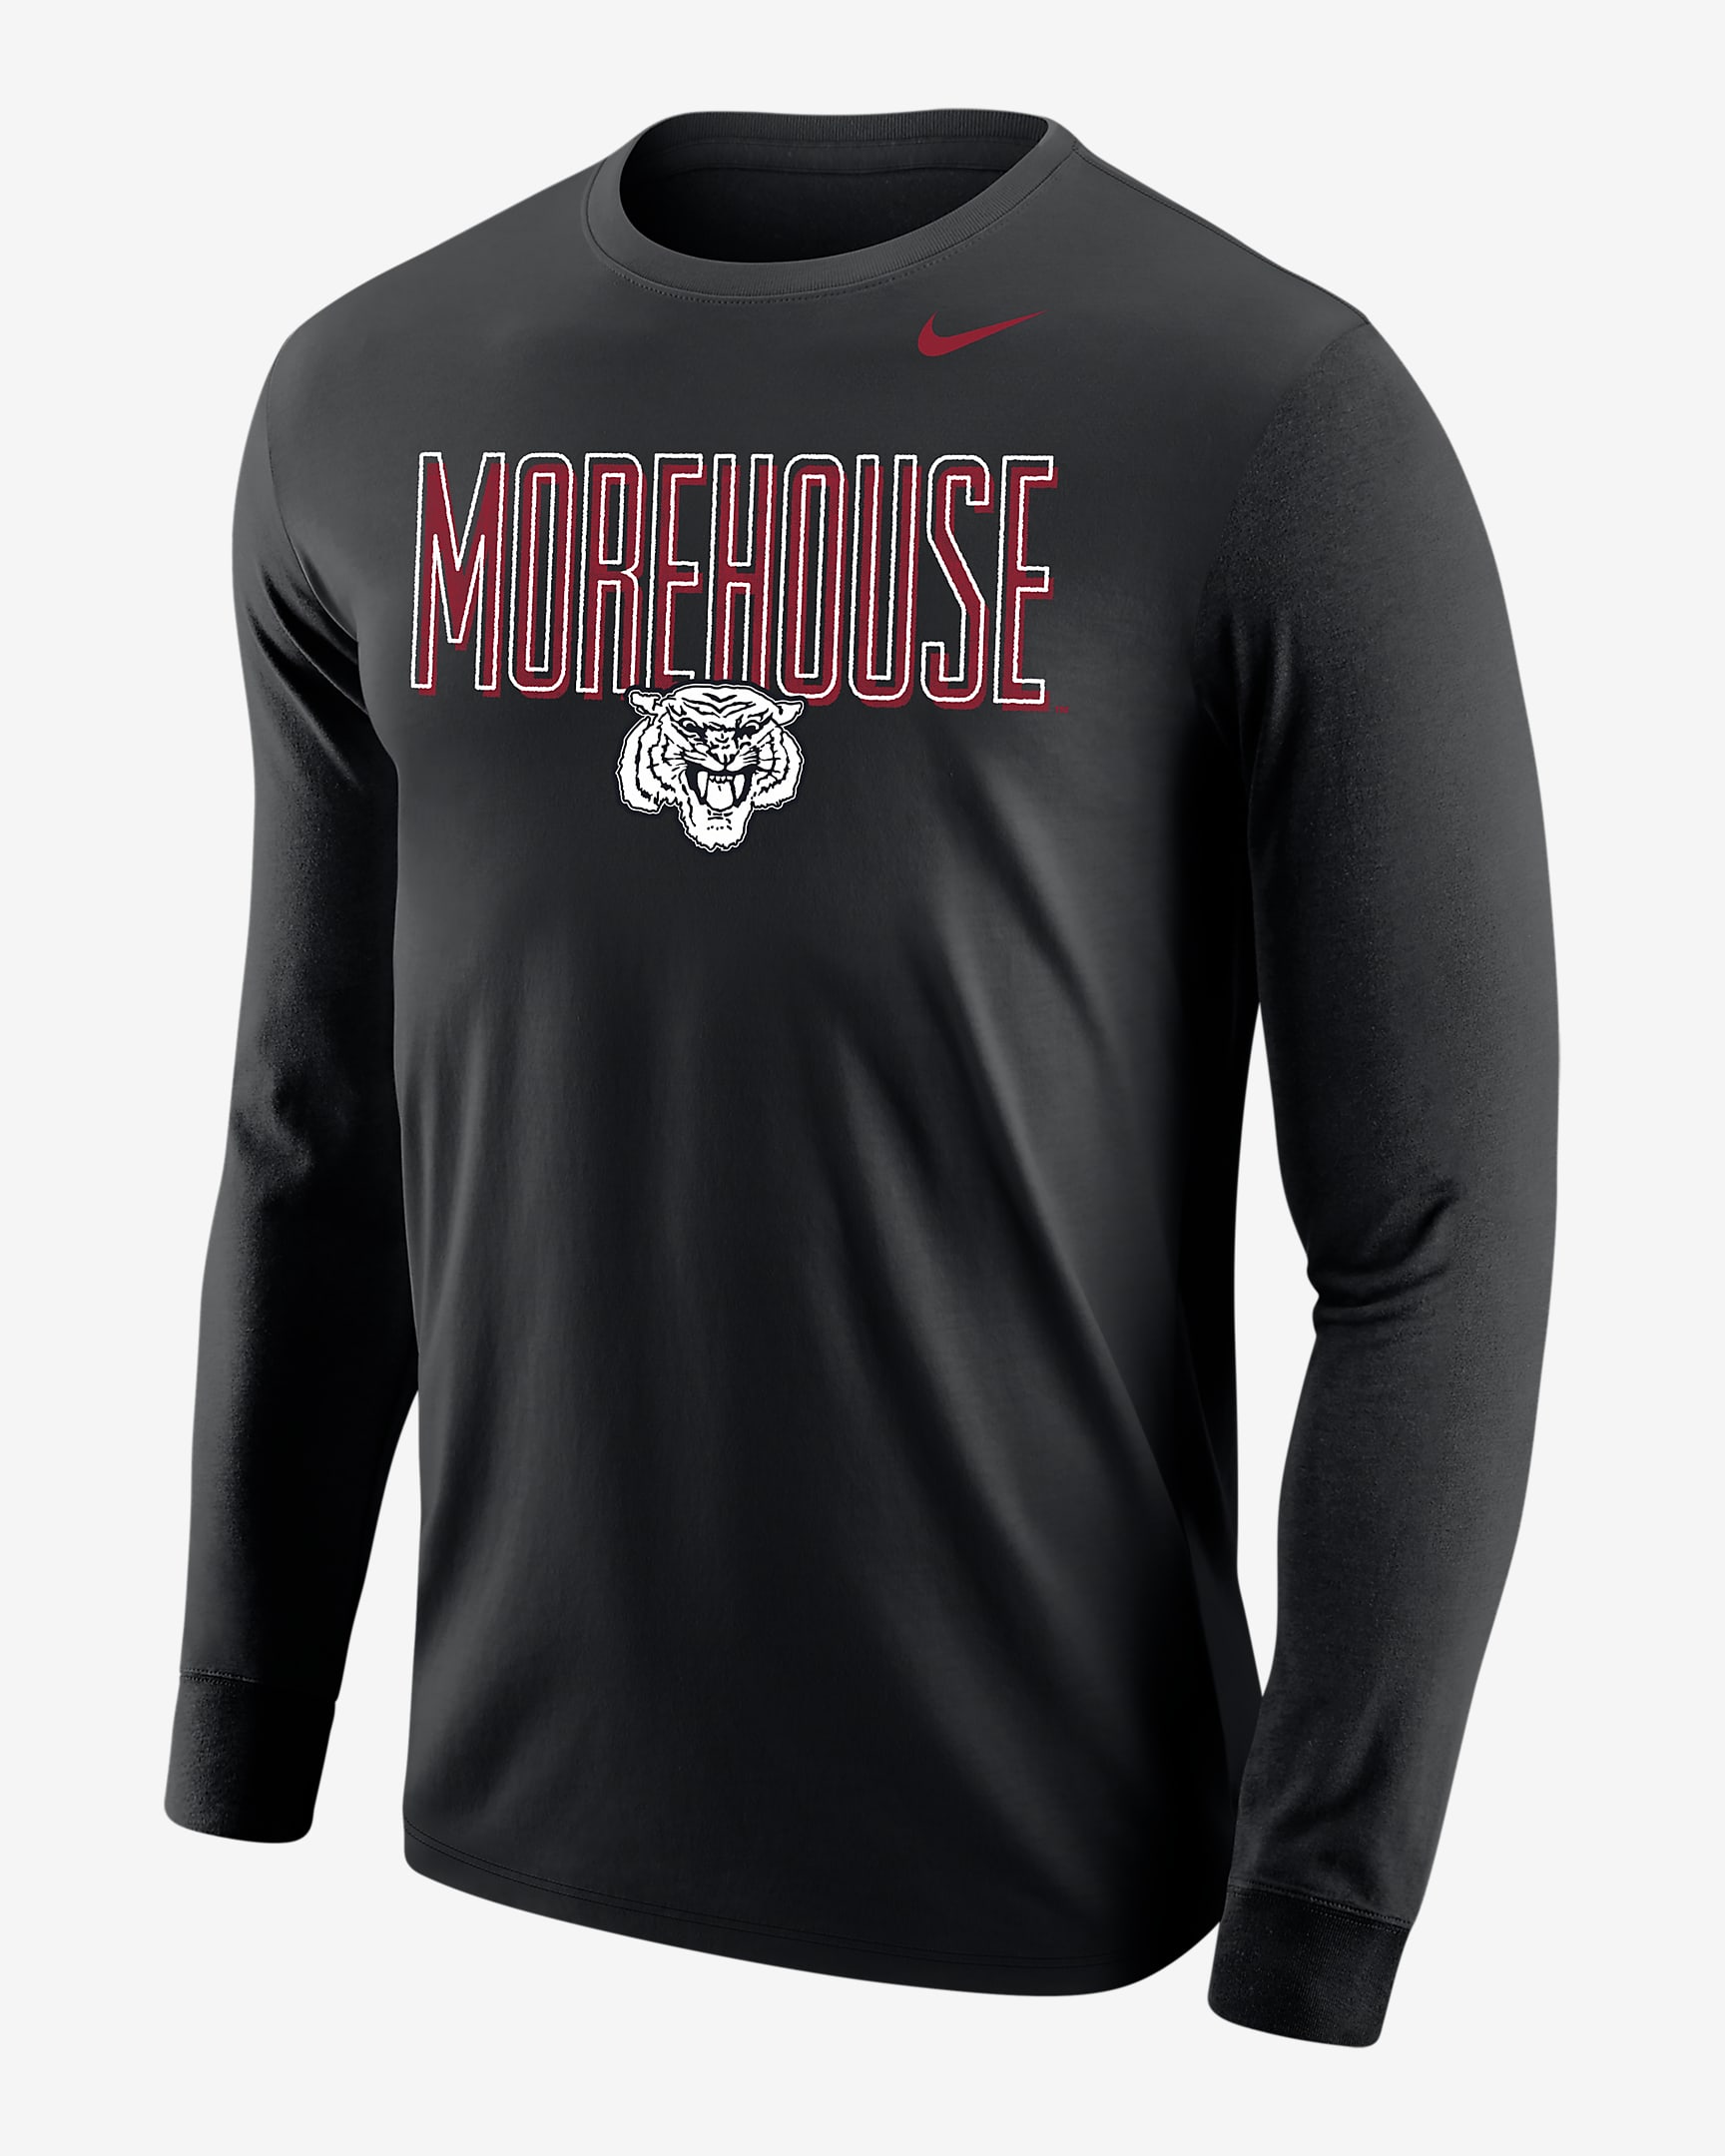 Nike College (Morehouse) Men's Long-Sleeve T-Shirt. Nike.com